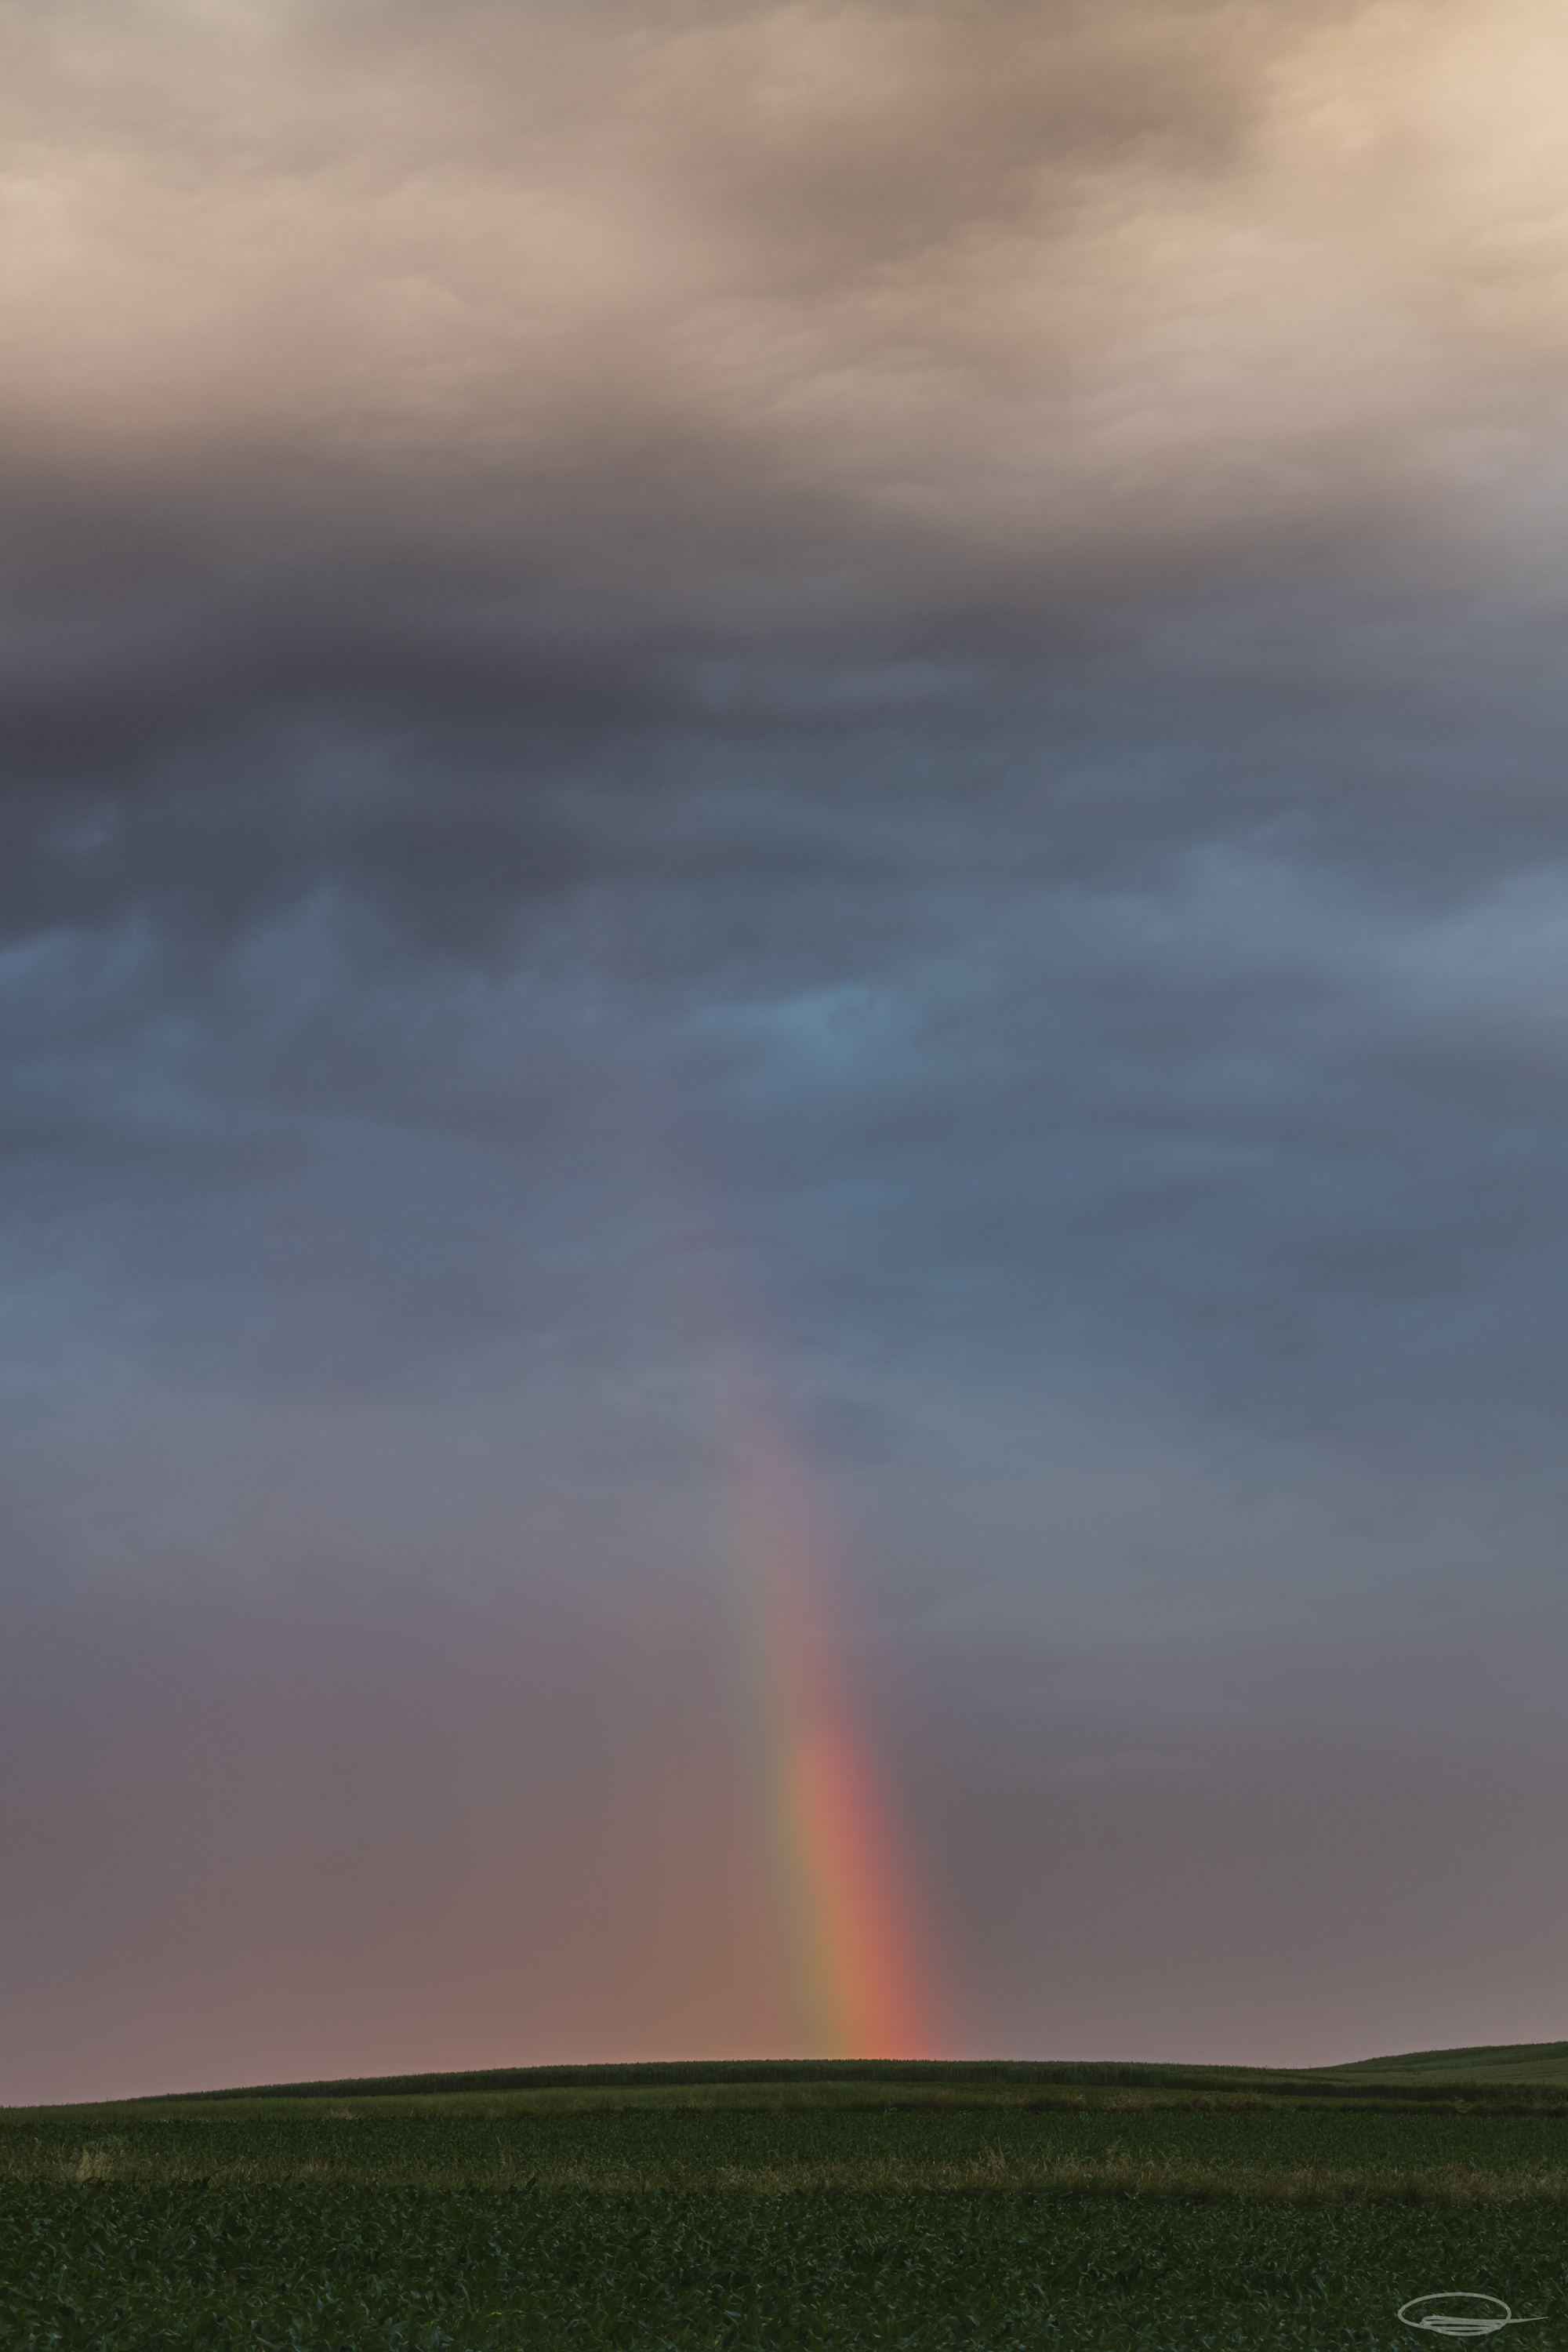 Just a rainbow at sunrise